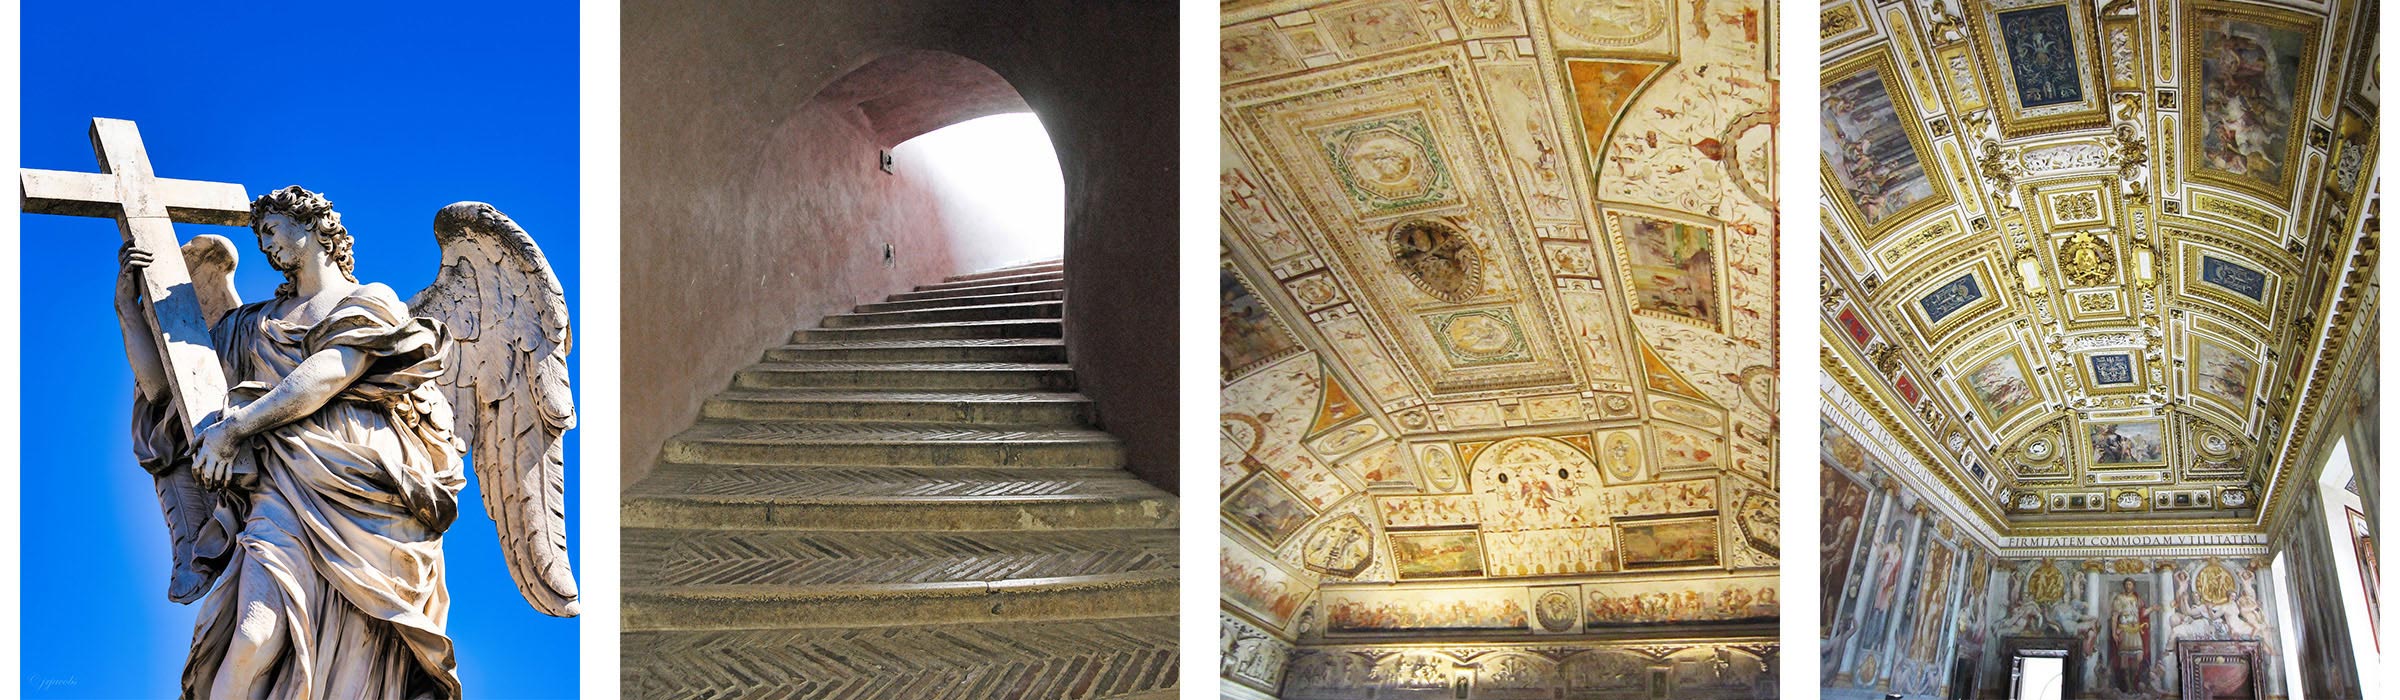 Castel Sant'Angelo | basamenti | stanze affrescate | stanze paoline